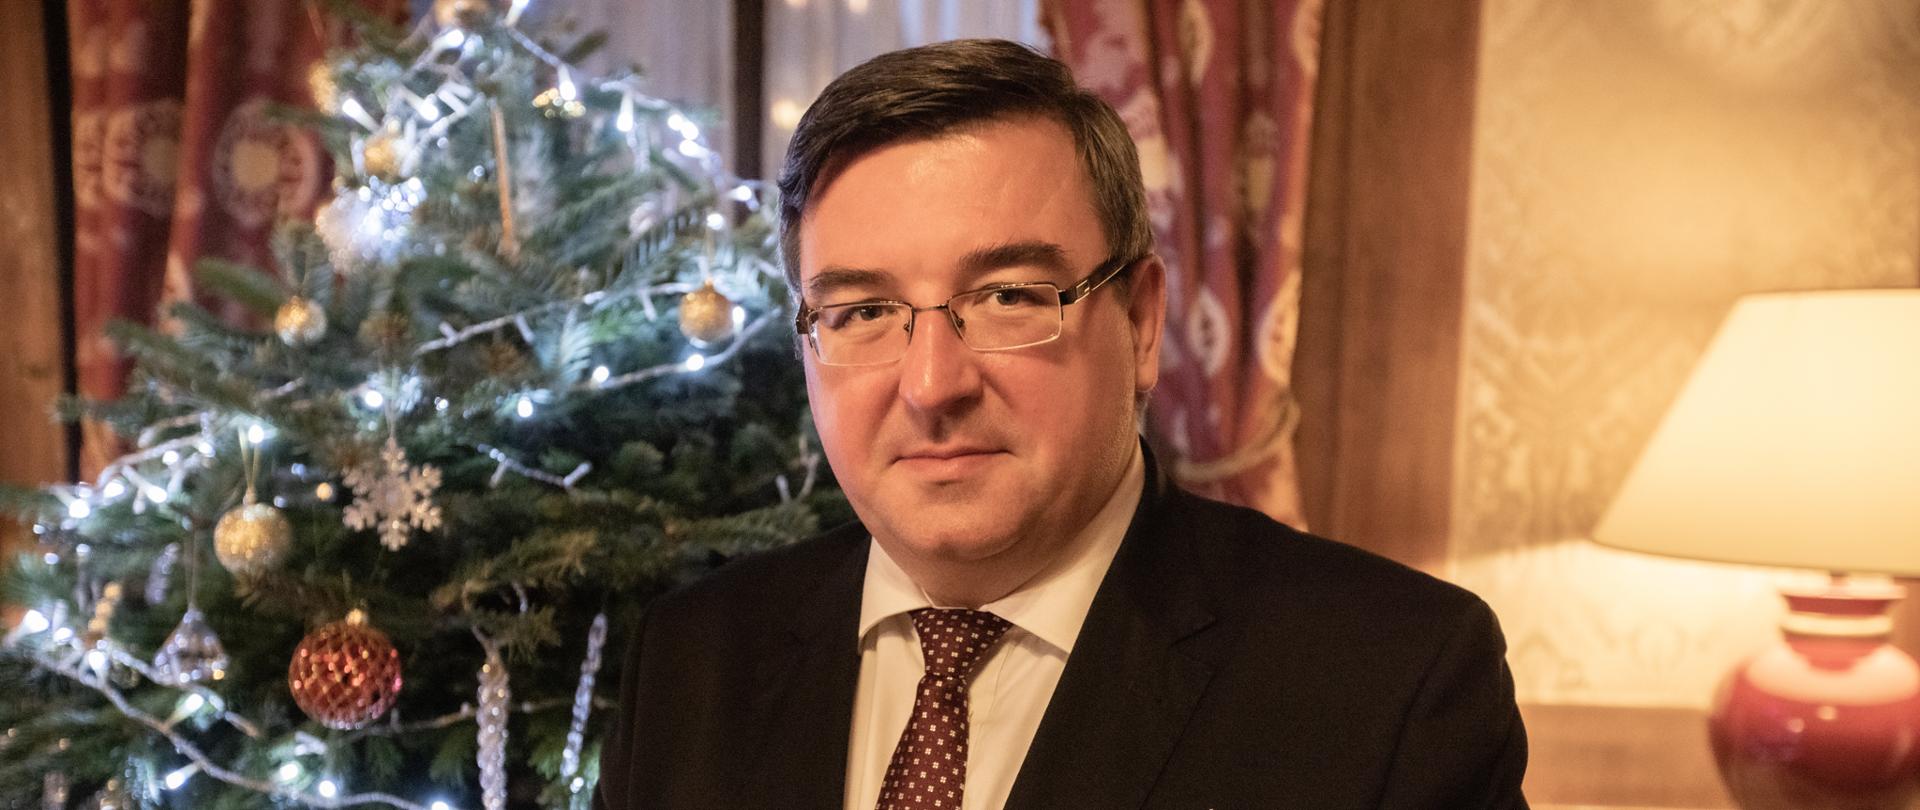 Ambasador Tomasz Młynarski